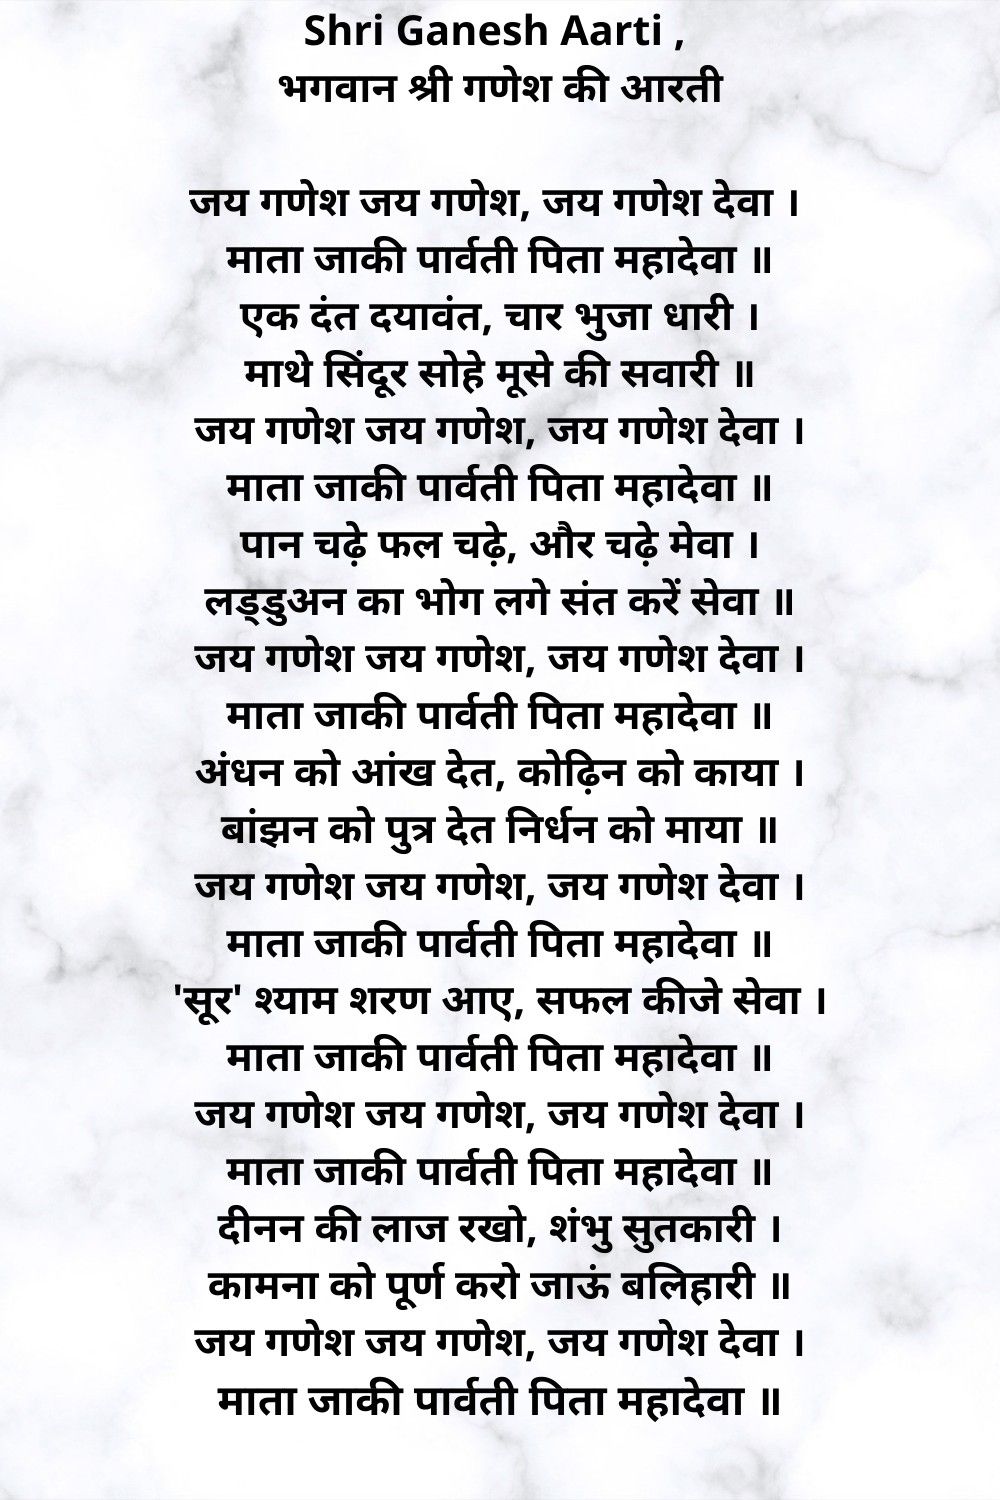 Ganesh Aarti lyrics